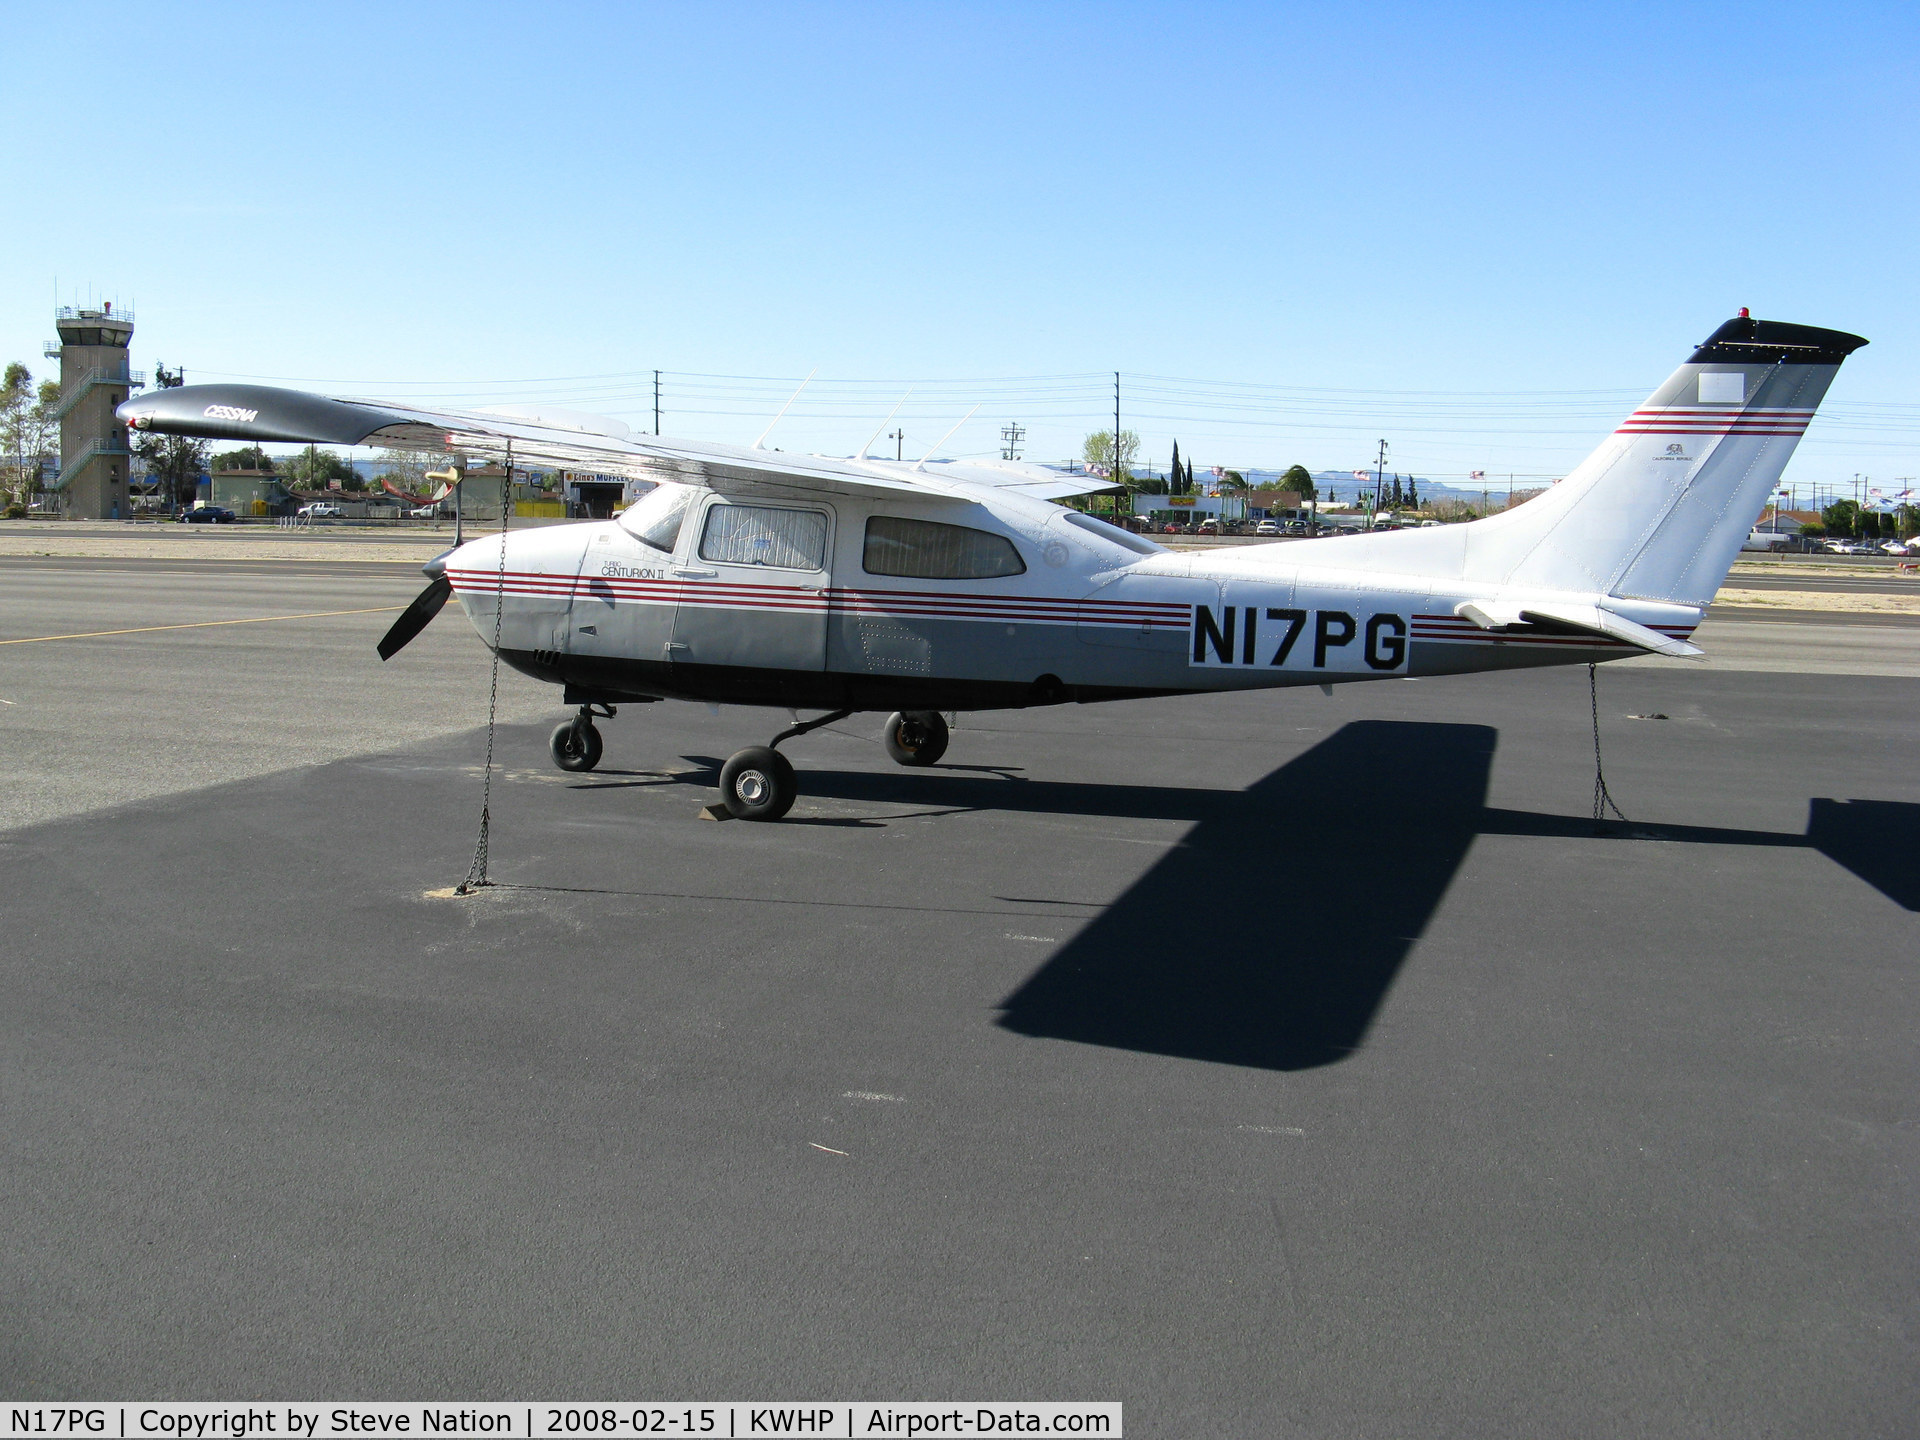 N17PG, 1978 Cessna T210M Turbo Centurion C/N 21062795, Christian Brothers Development (Santa Clarita, CA) 1978 Cessna T210M @ Whiteman Airport, Pacoima, CA Home Base